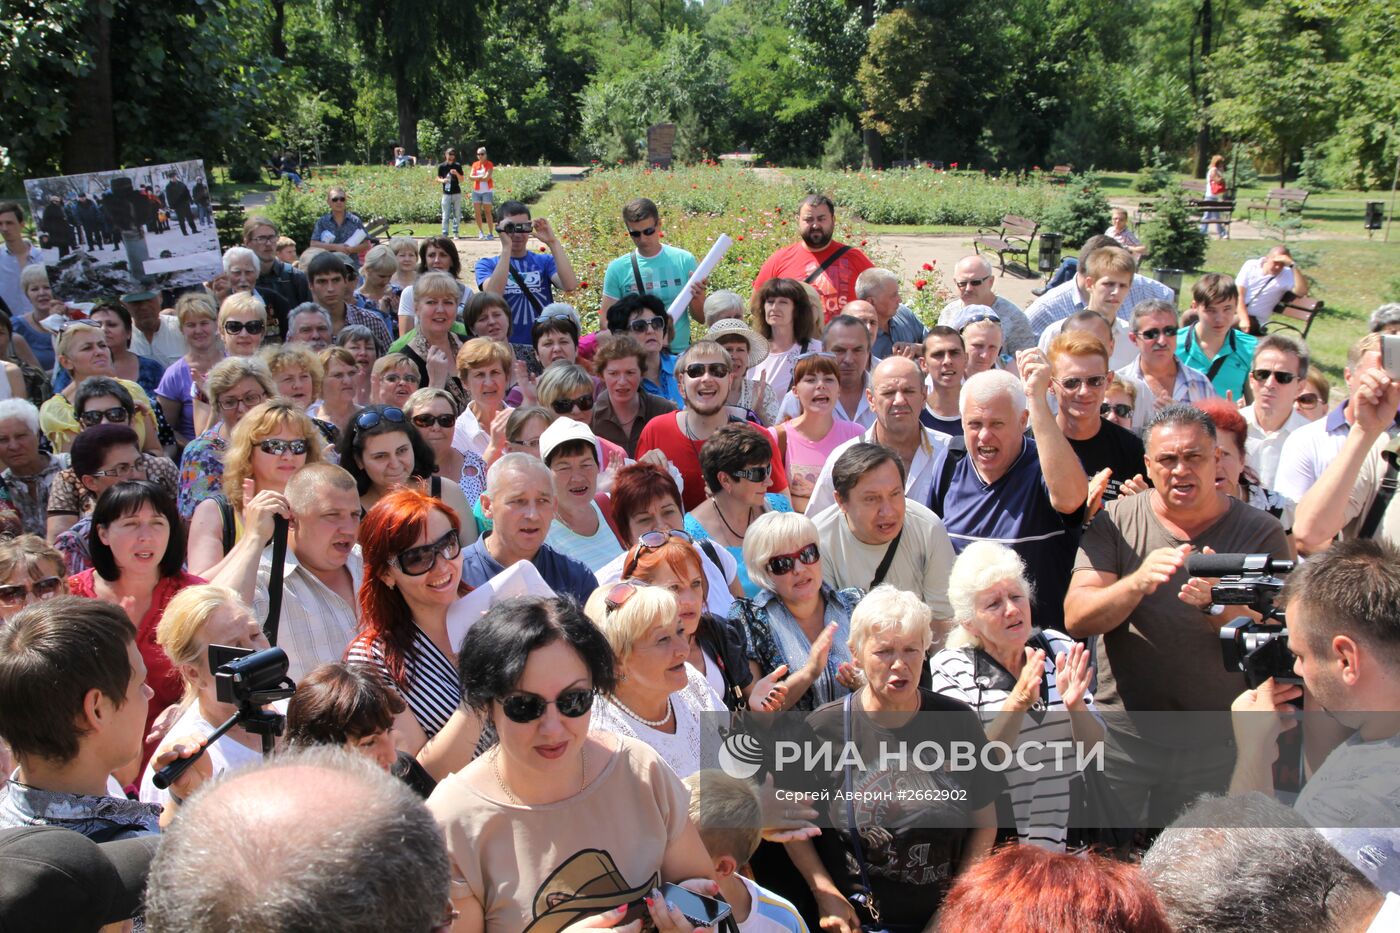 Митинг-протест жителей Донецка